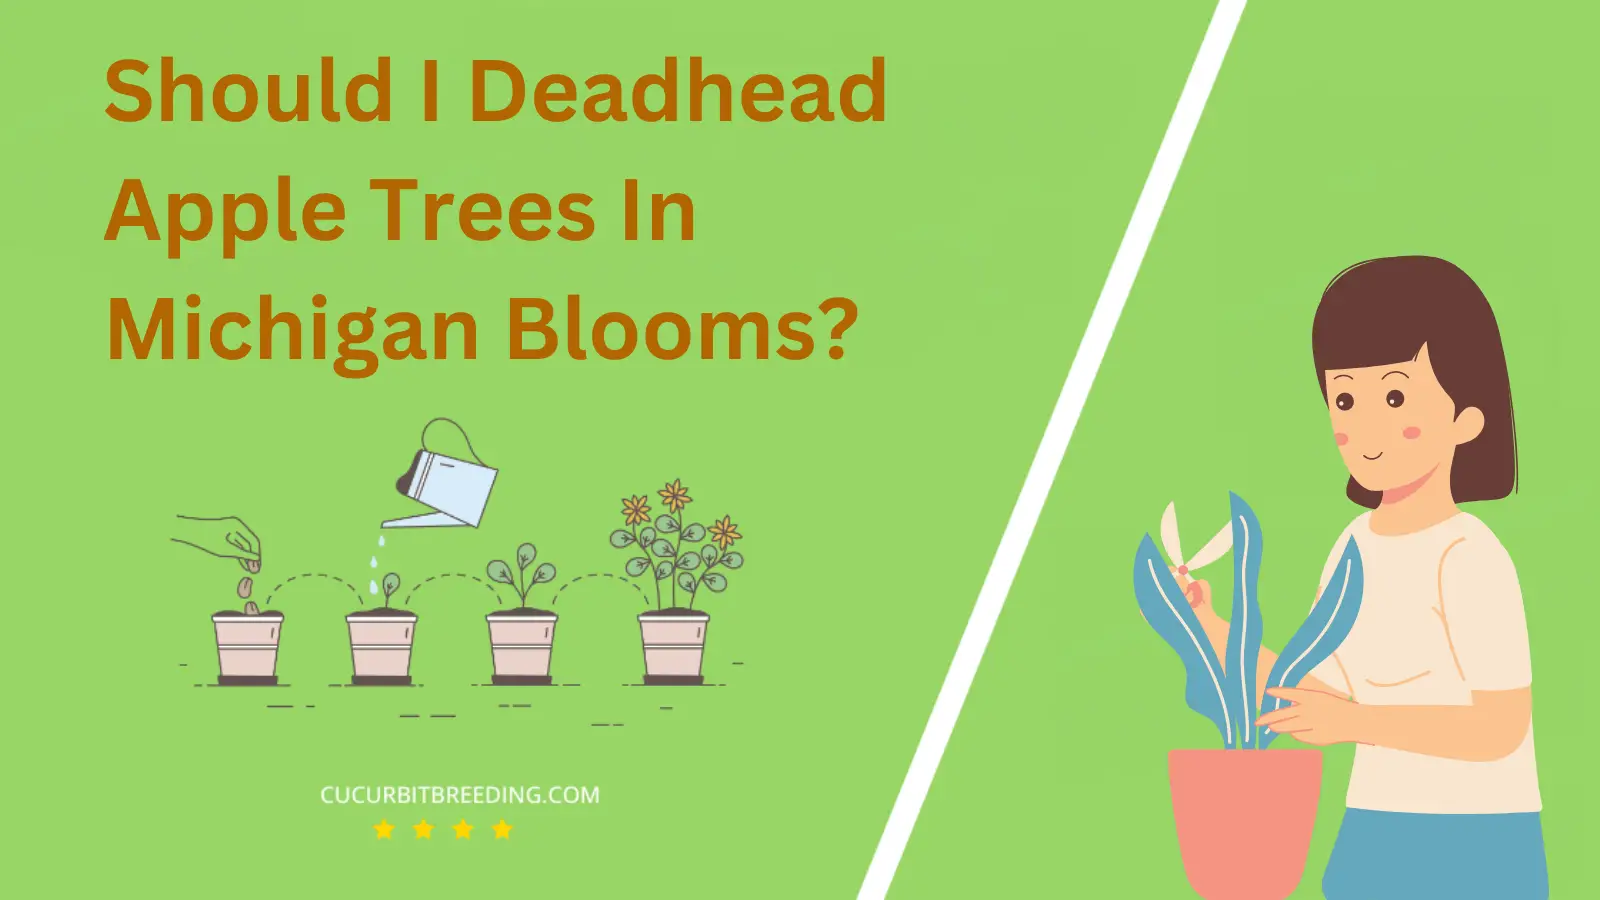 Should I Deadhead Apple Trees In Michigan Blooms?